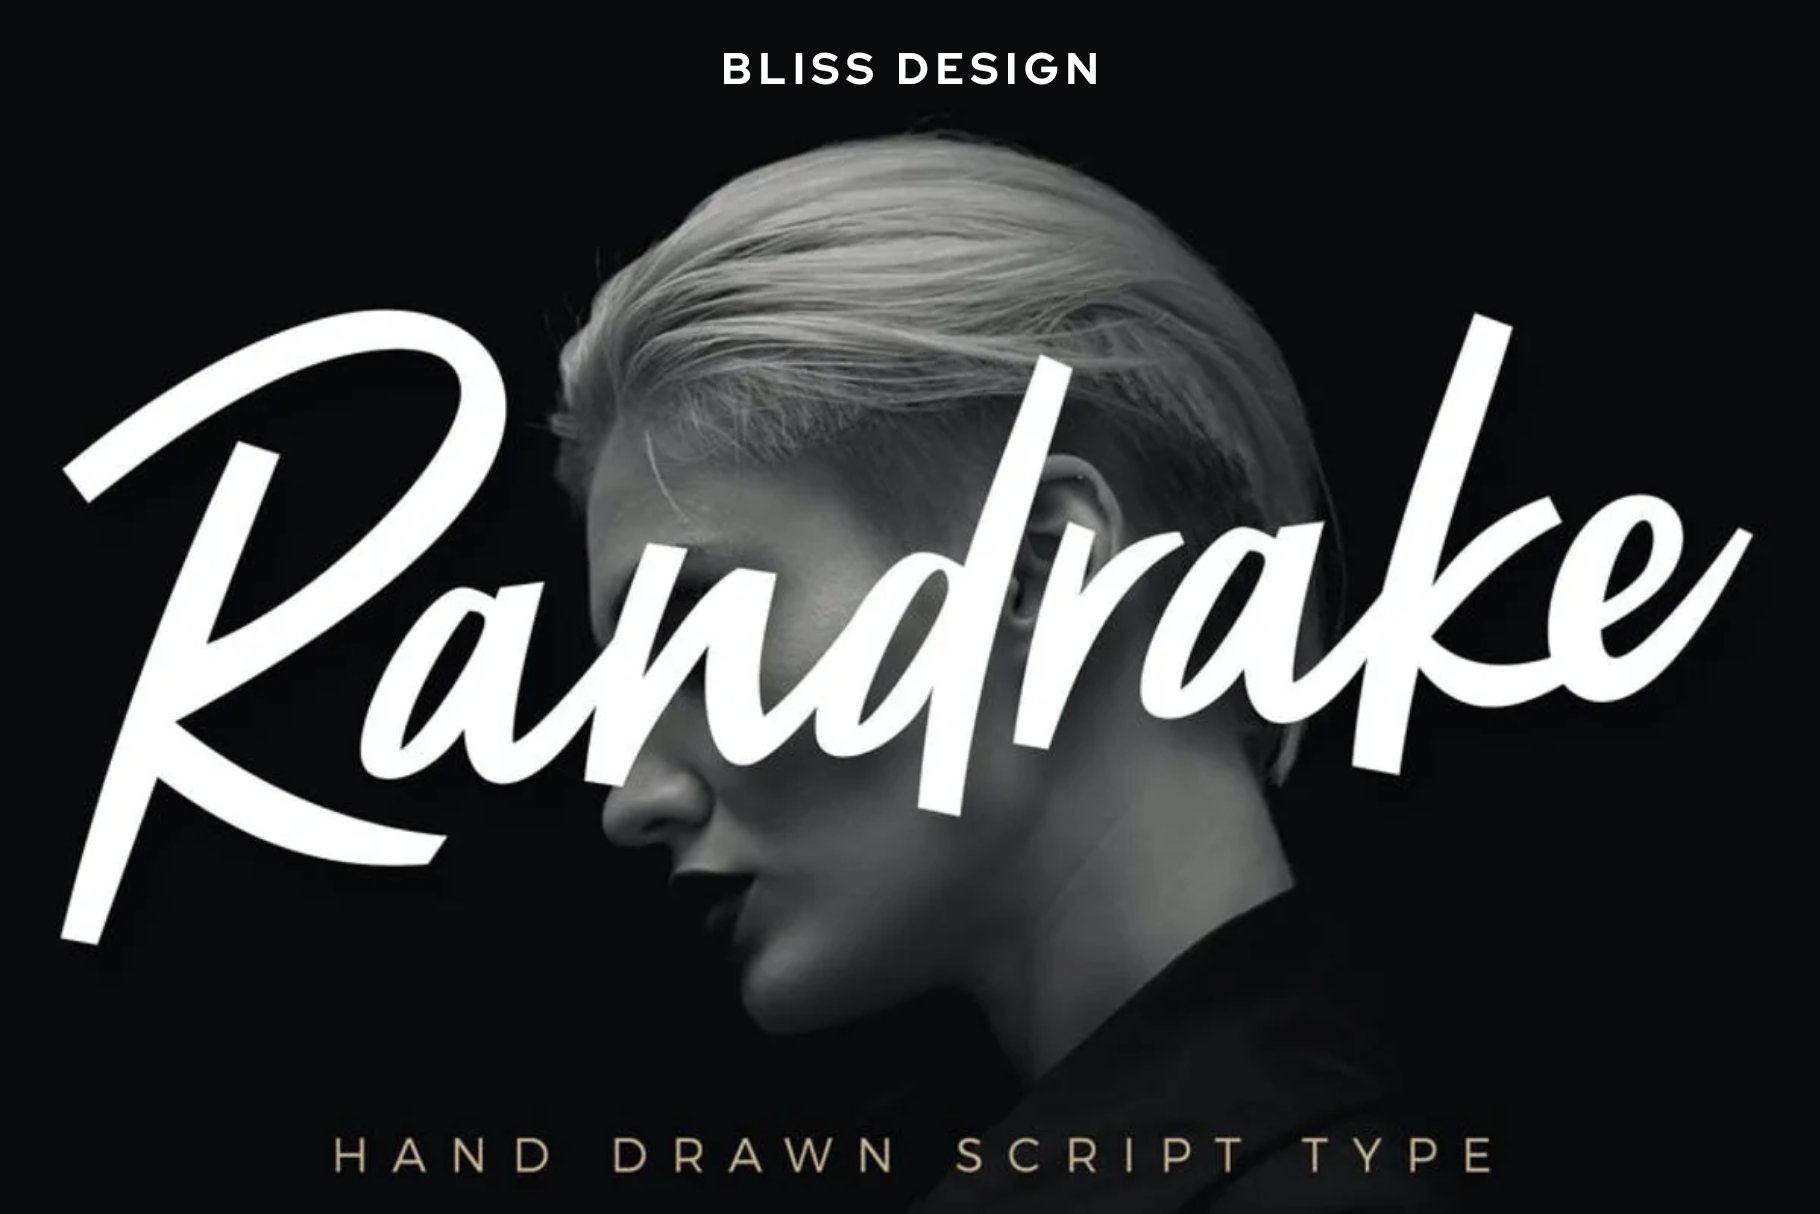 Randrake - Font Script cover image.